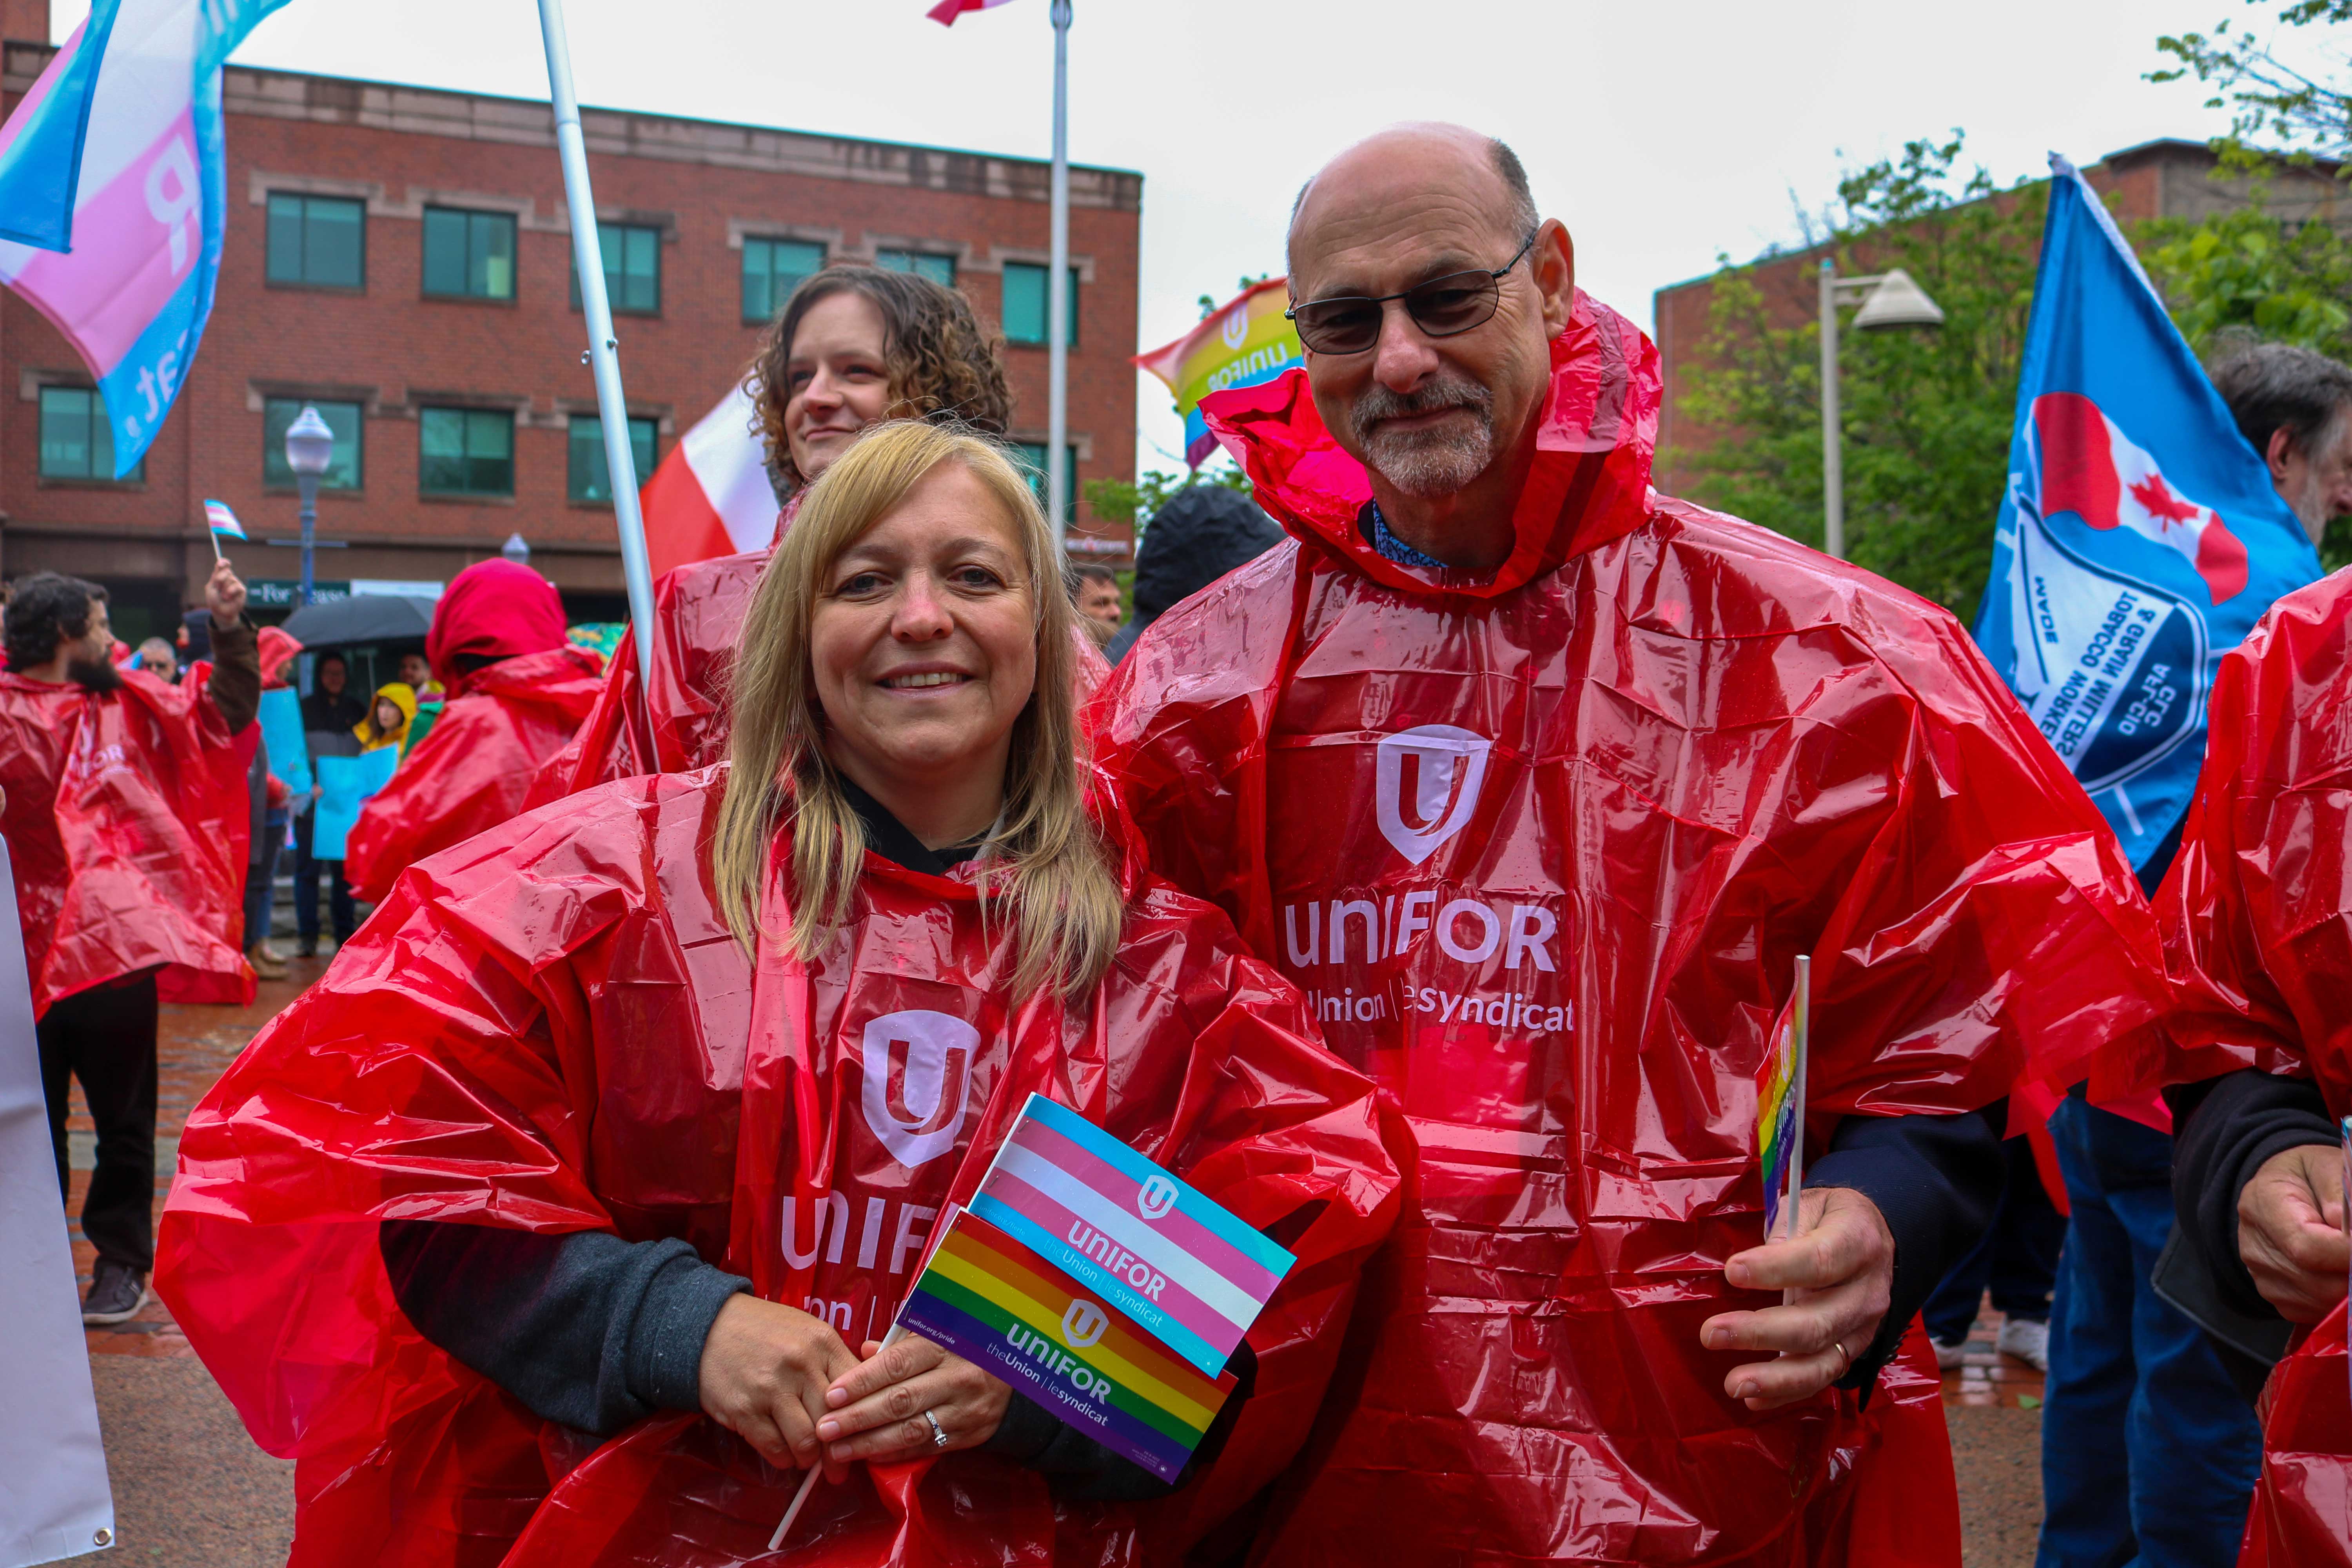 Jen and Len holding a trans pride flag wearing rain ponchos